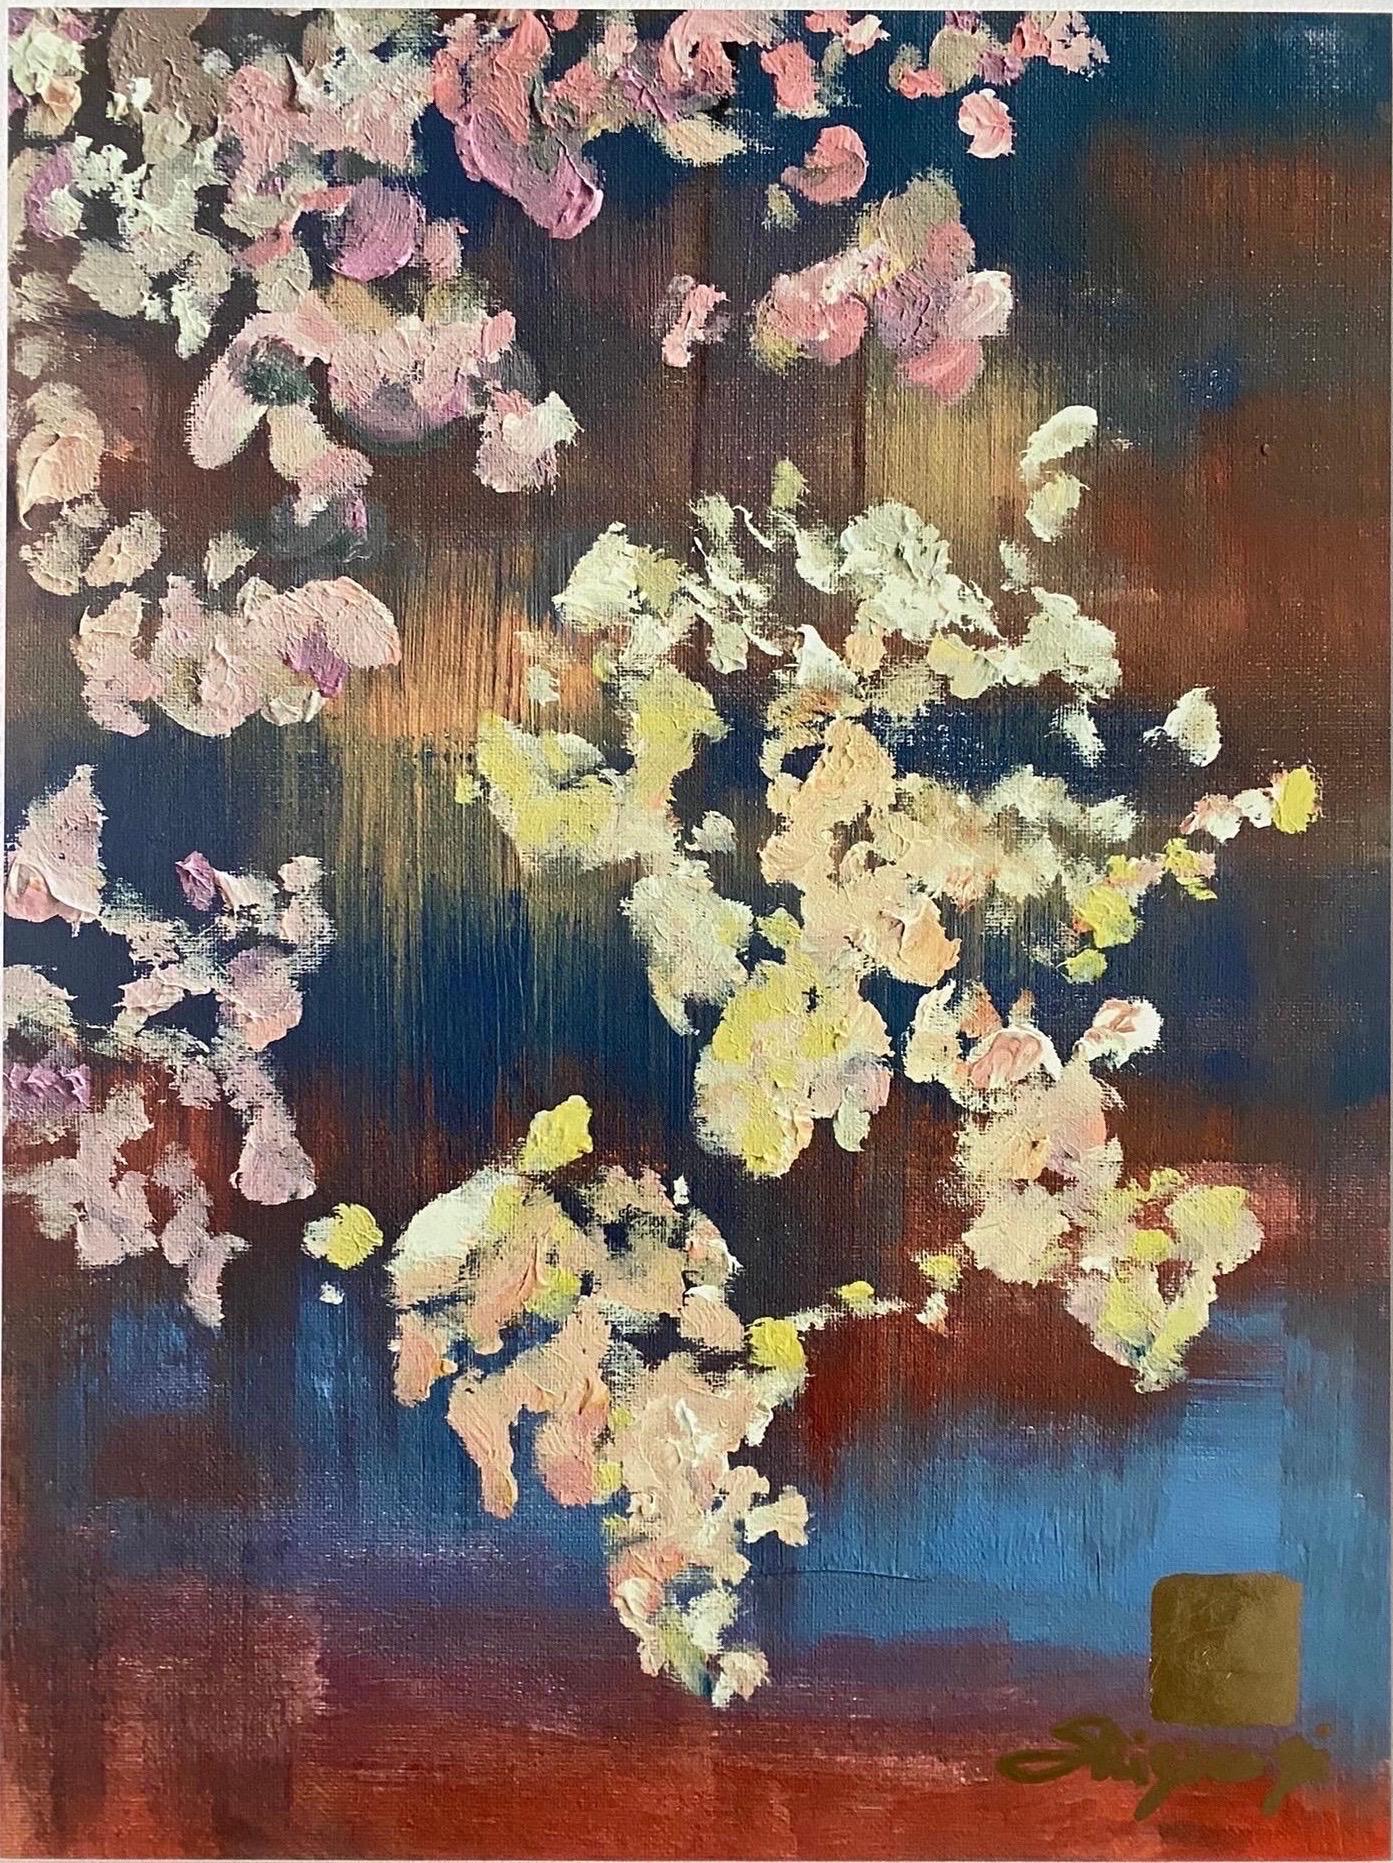 Shizico Yi Abstract Print - London Sakura Limited Edition #1-gold leaf-abstract-expression-UK awarded artist